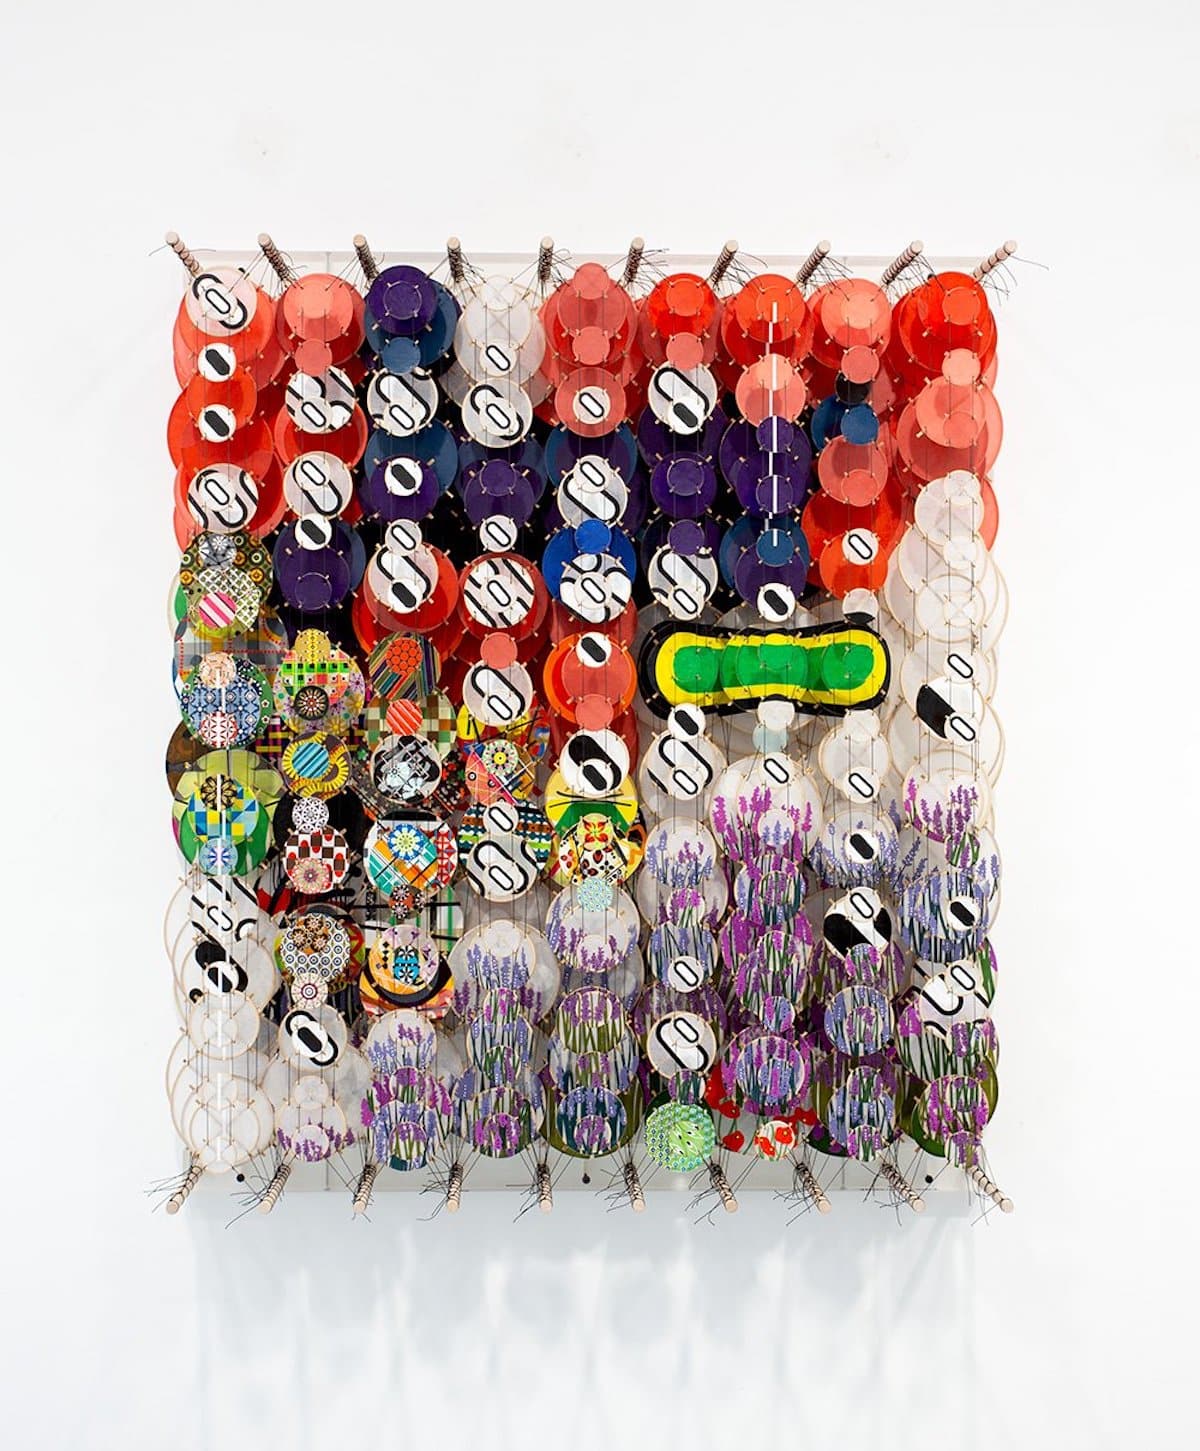 Kite Installation by Jacob Hashimoto